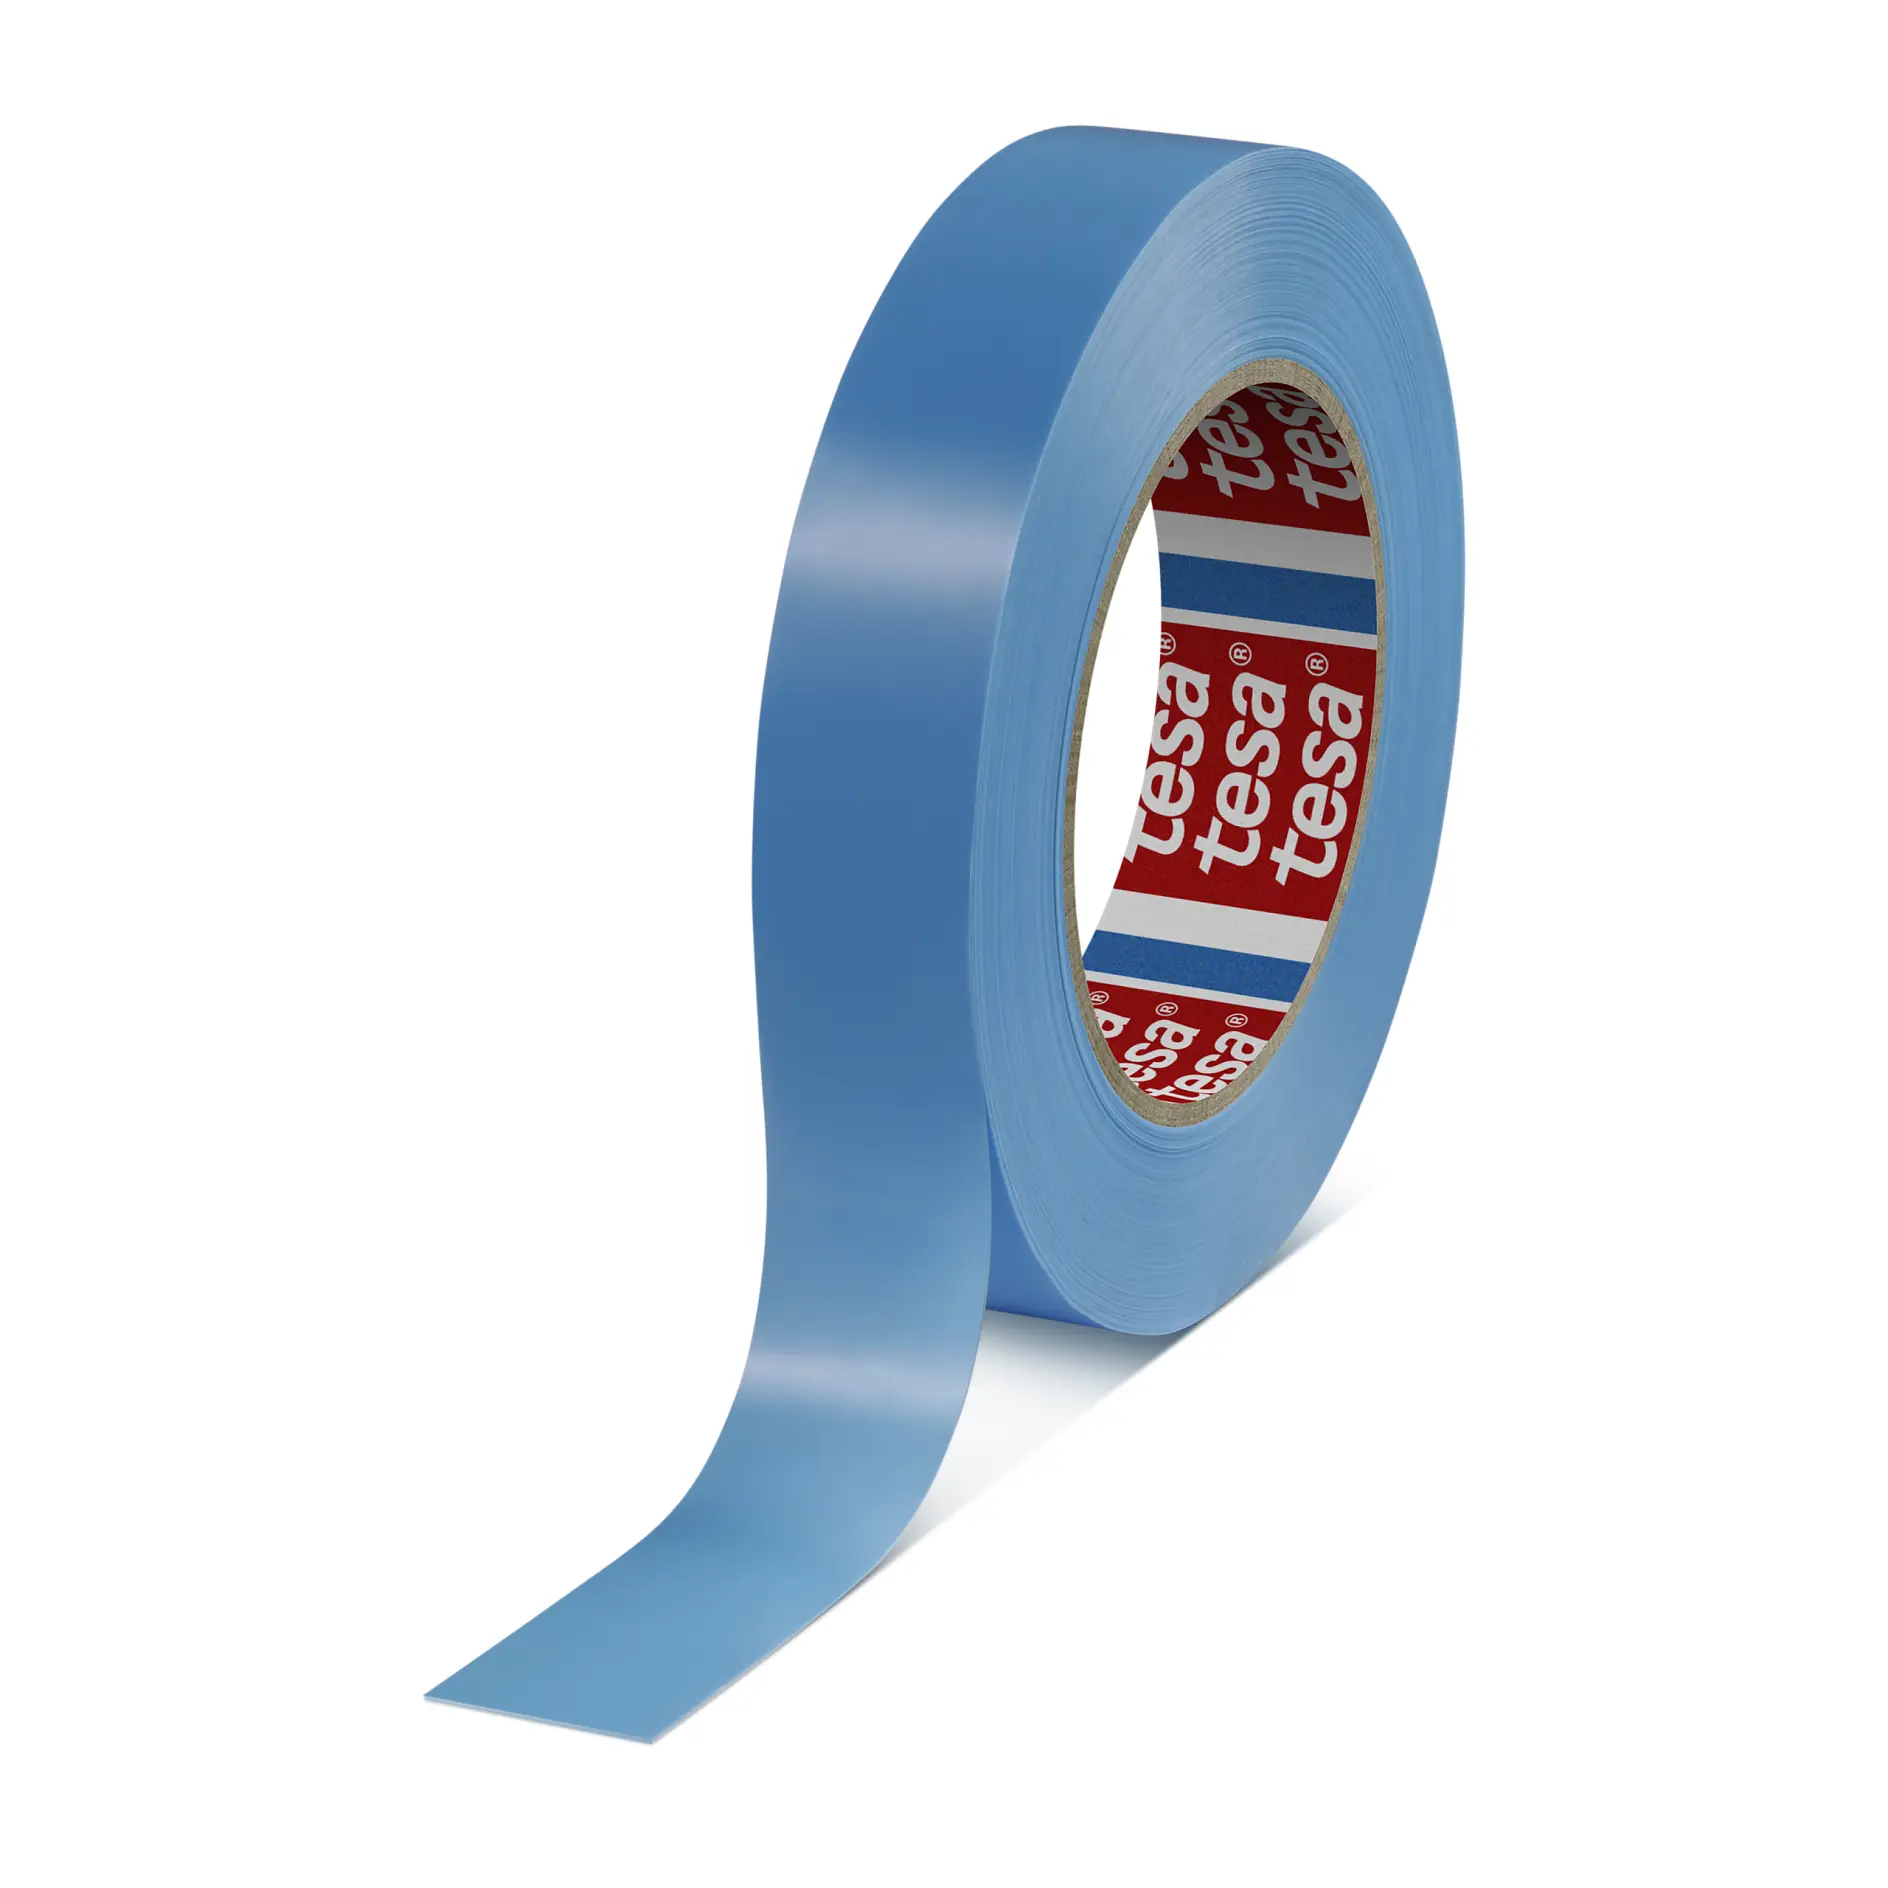 tesa-64284-tensilised-non-staining-strapping-tape-light-blue-642840000400-pr